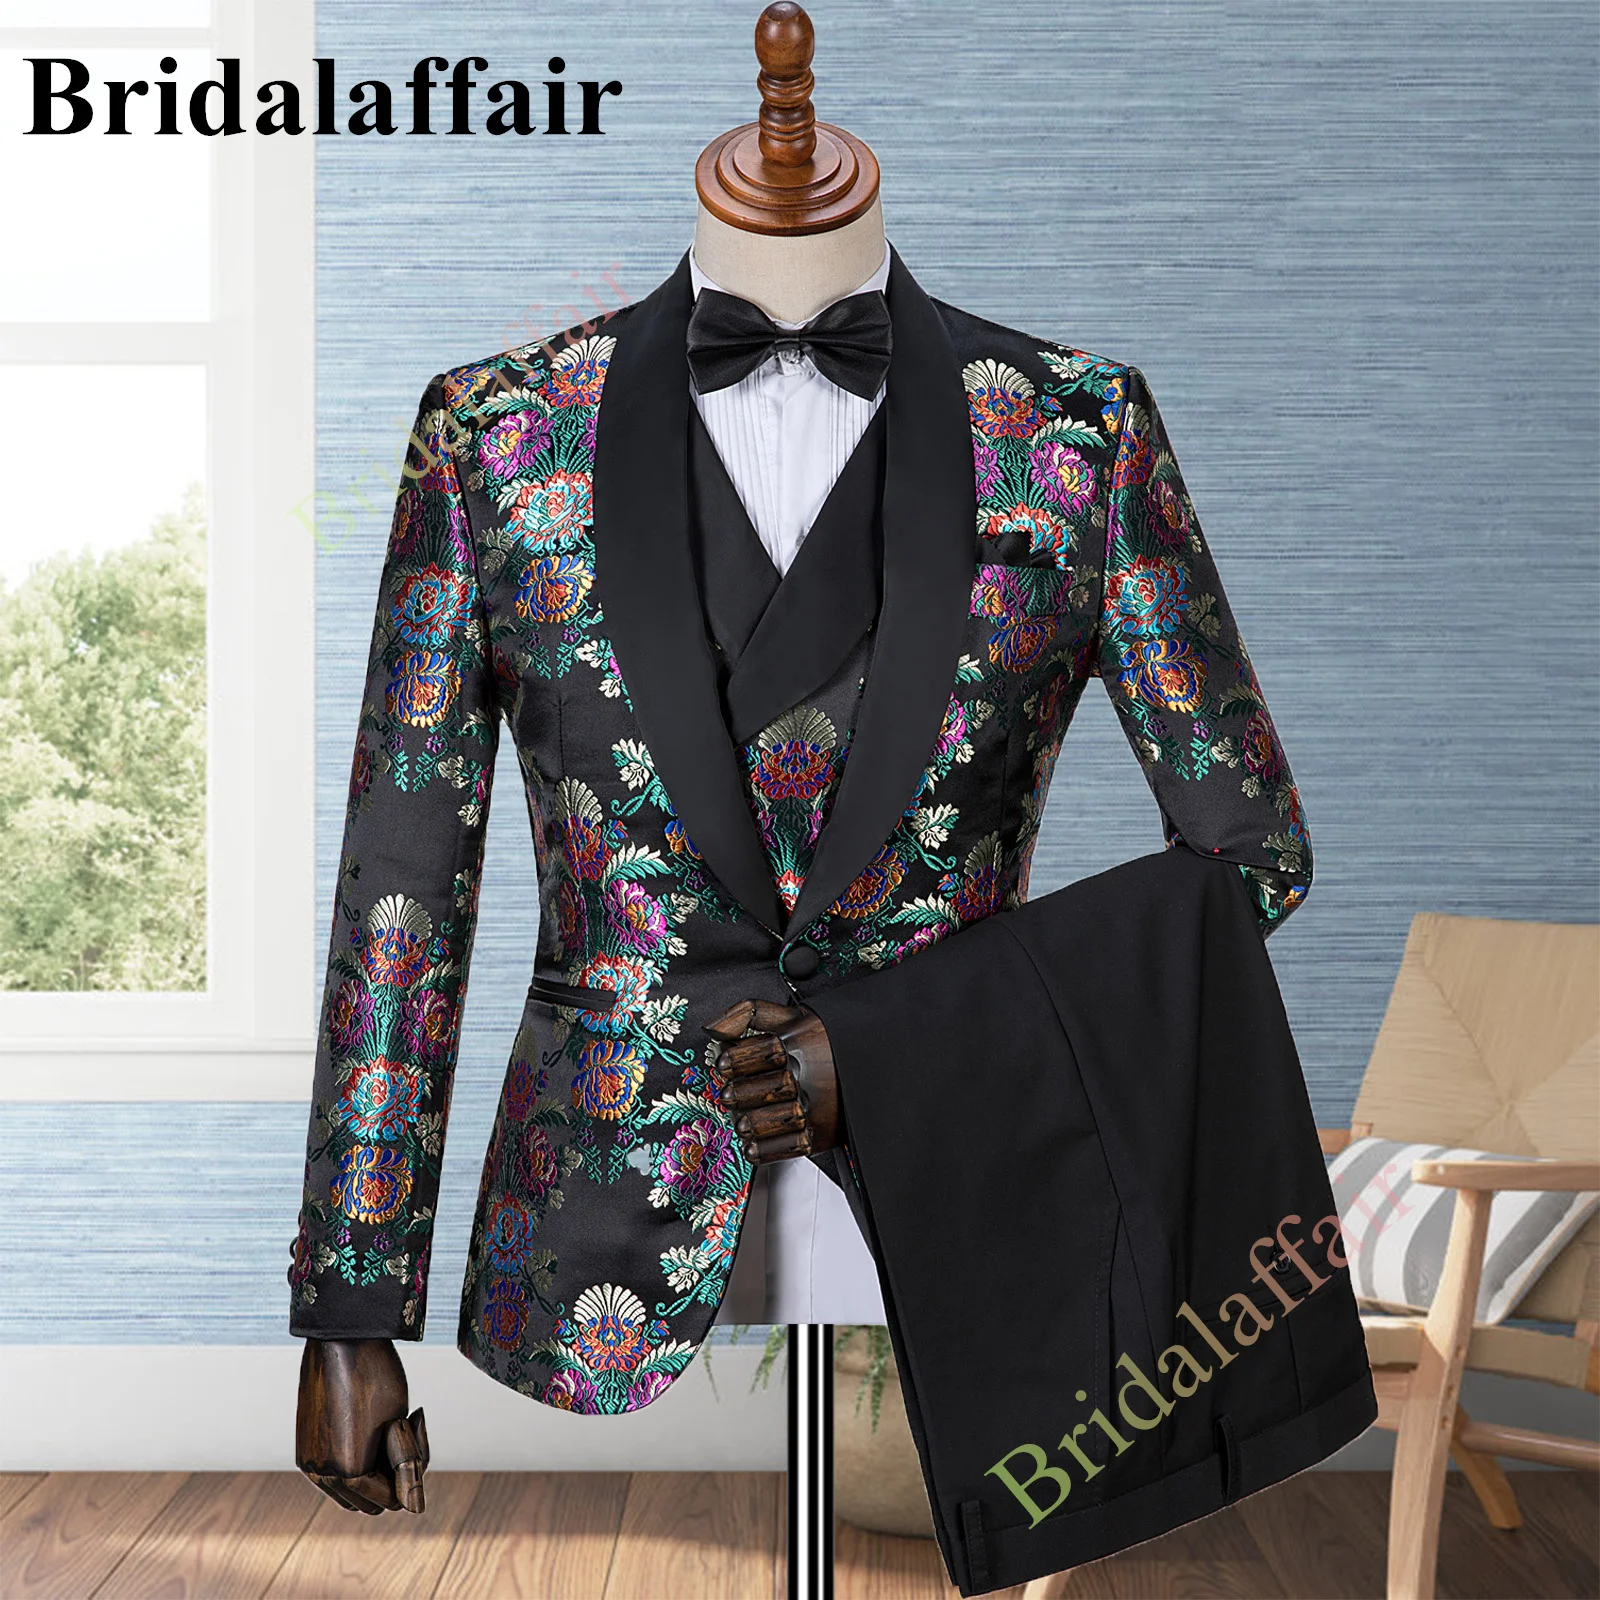 Bridalaffair Mens Black Suits Slim Fit Floral Printed Wedding Tuxedo for Men 3pcs Blazer Jacket Vest Pant Set Costume Homme